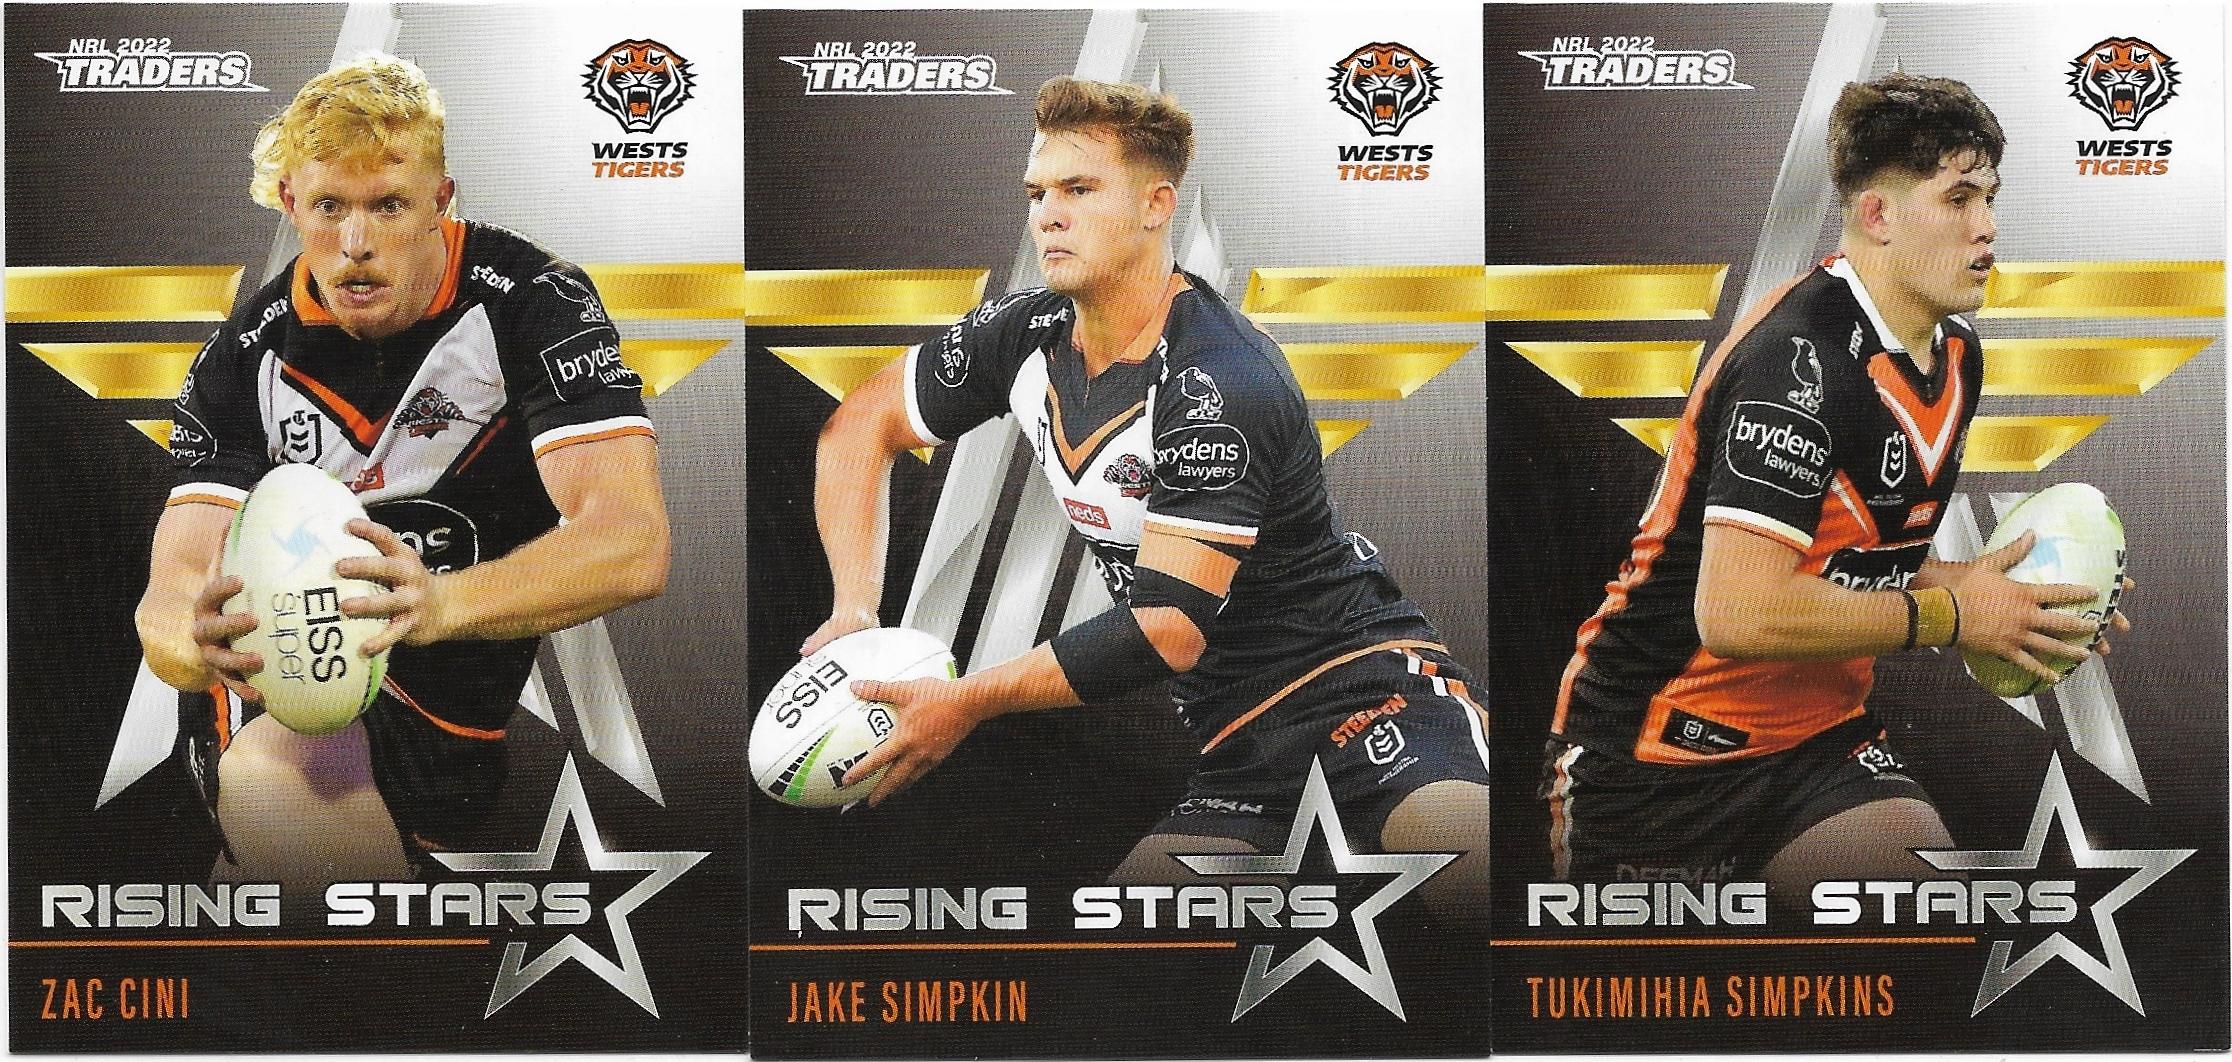 2022 Nrl Traders Rising Stars 3 Card Team Set – Wests Tigers